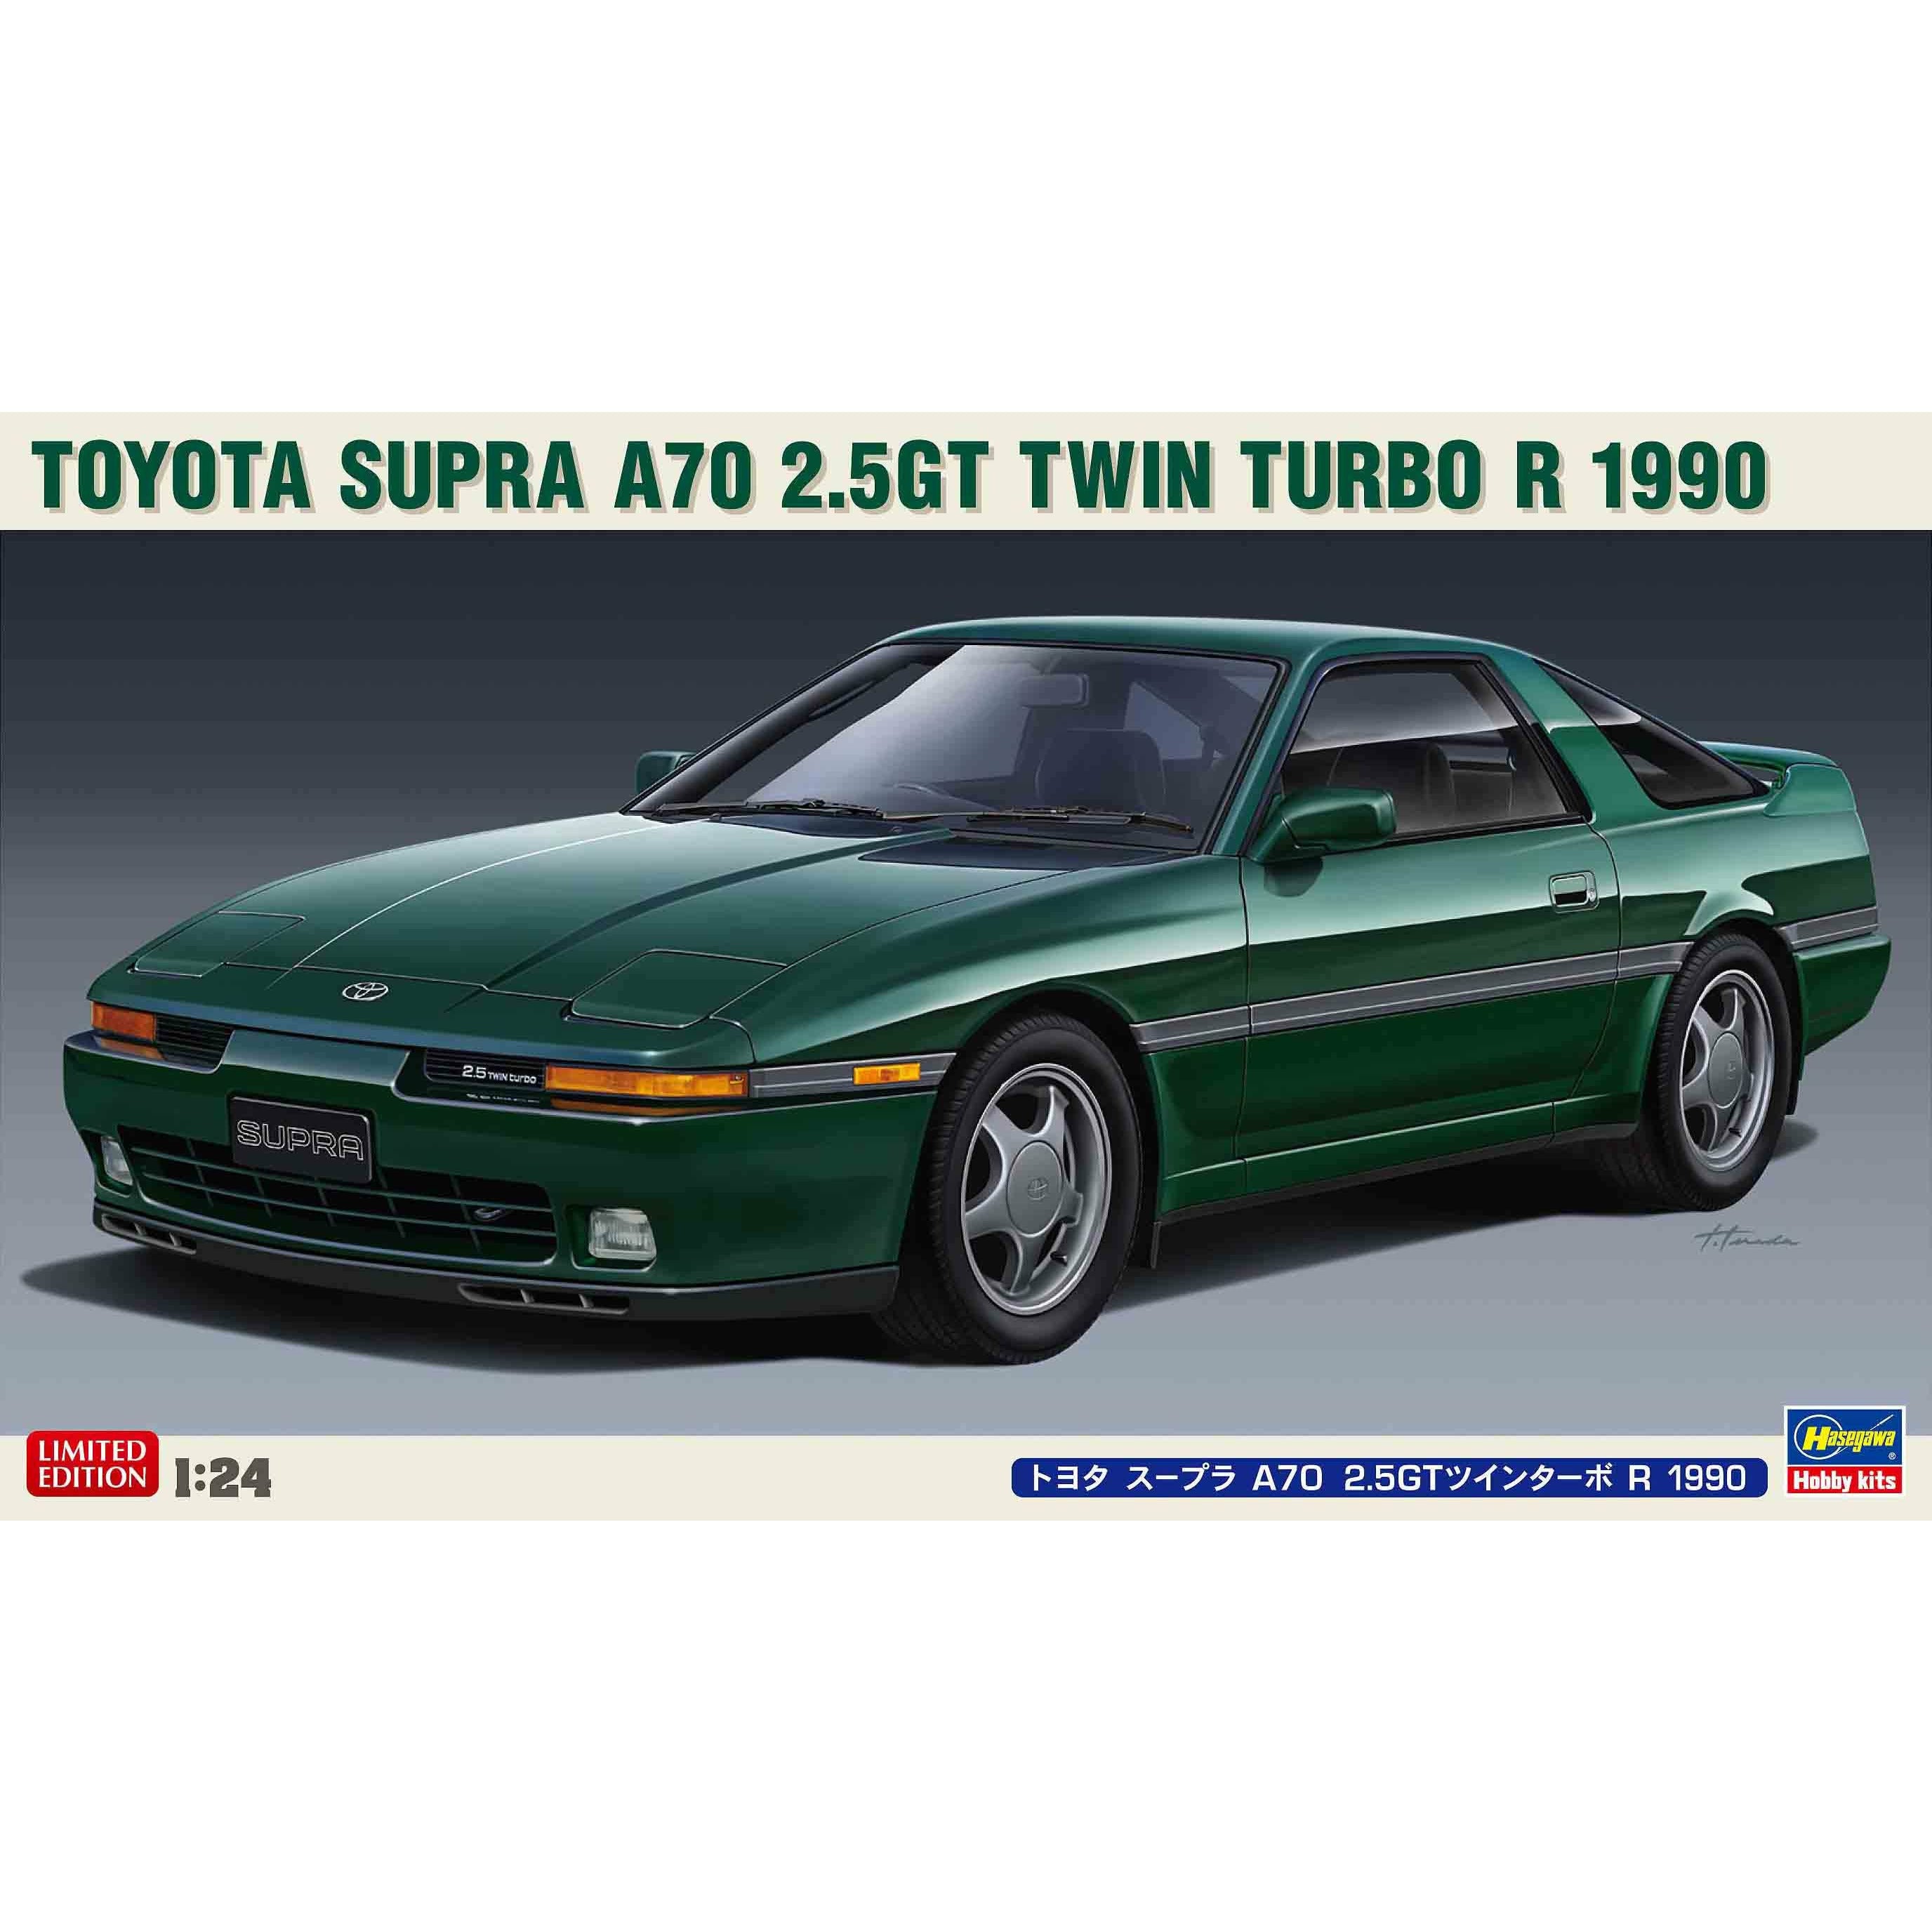 Toyota Supra A70 2.5GT Twin Turbo R 1990 1/24 Model Car Kit #20538 by Hasegawa